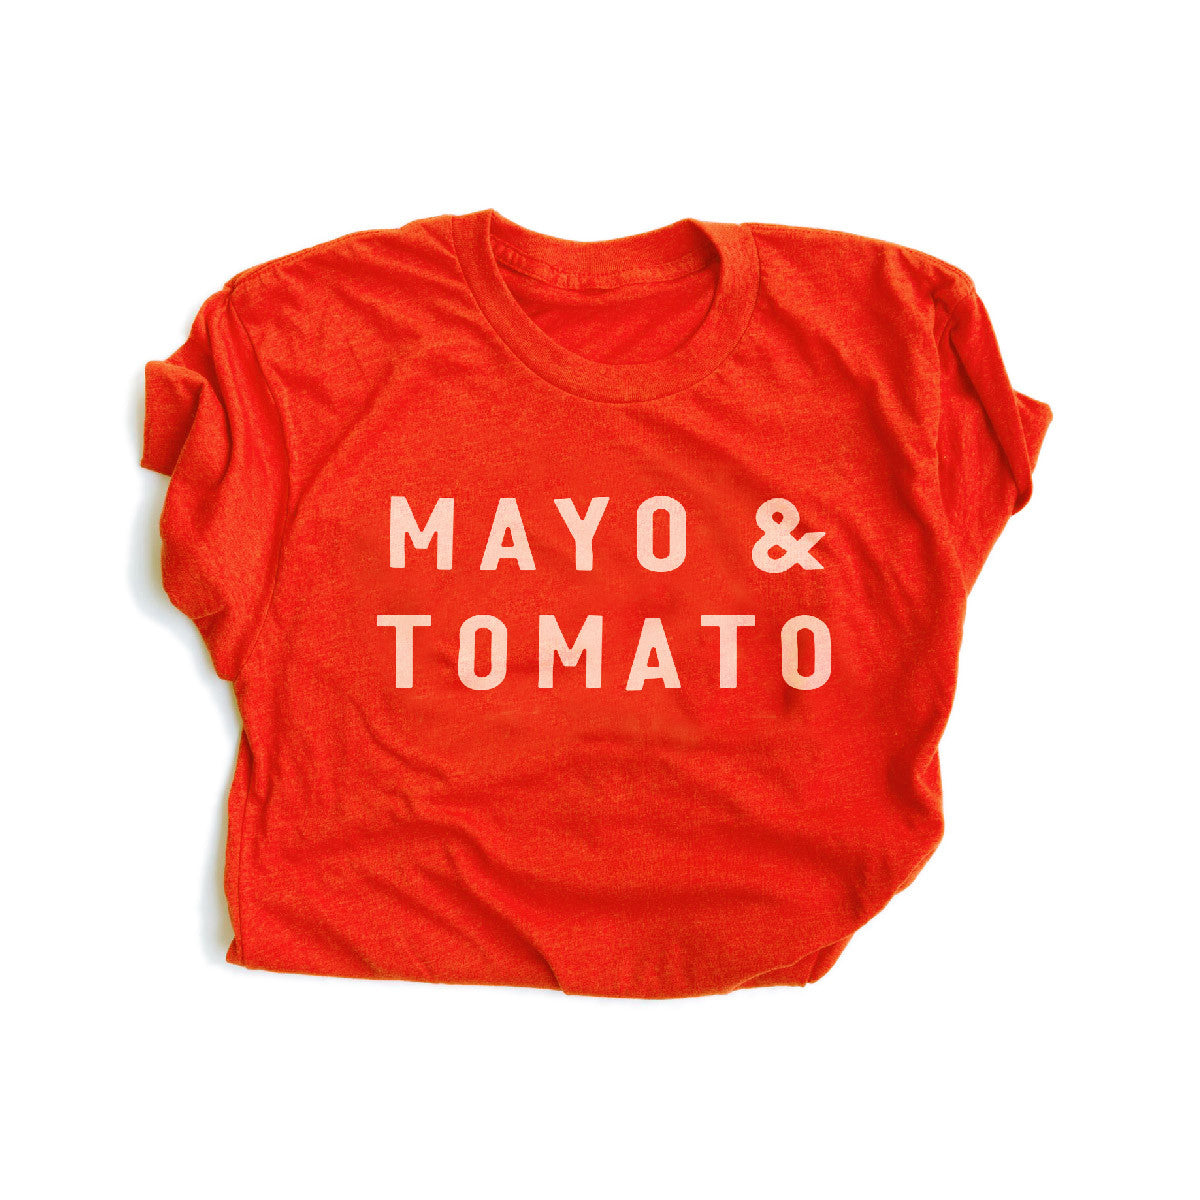 The Tomato Sandwich T-Shirt